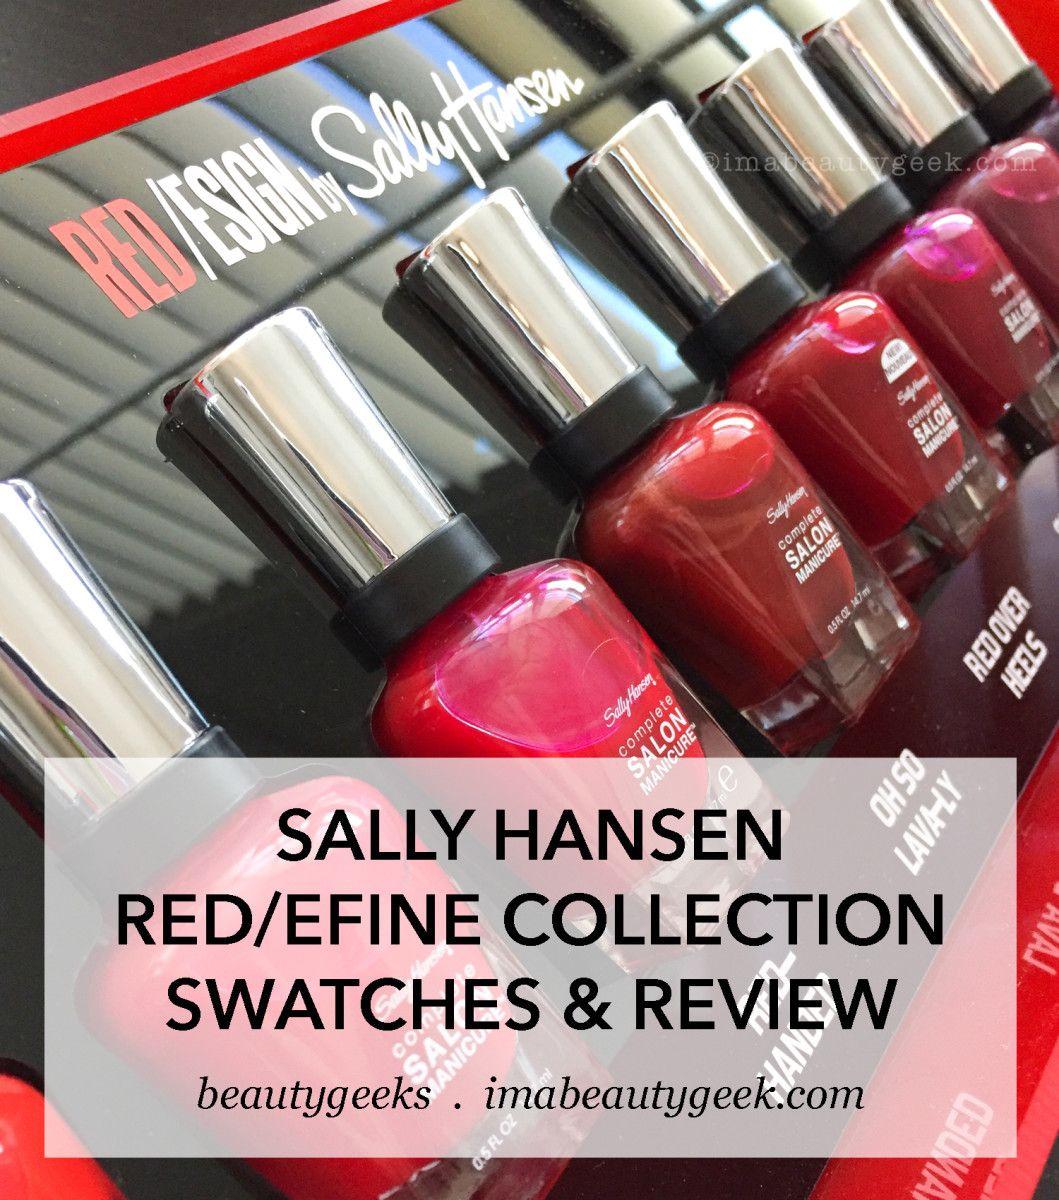 The Sally Hansen Logo - SALLY HANSEN RED ESIGN COLLECTION SWATCHES & REVIEW